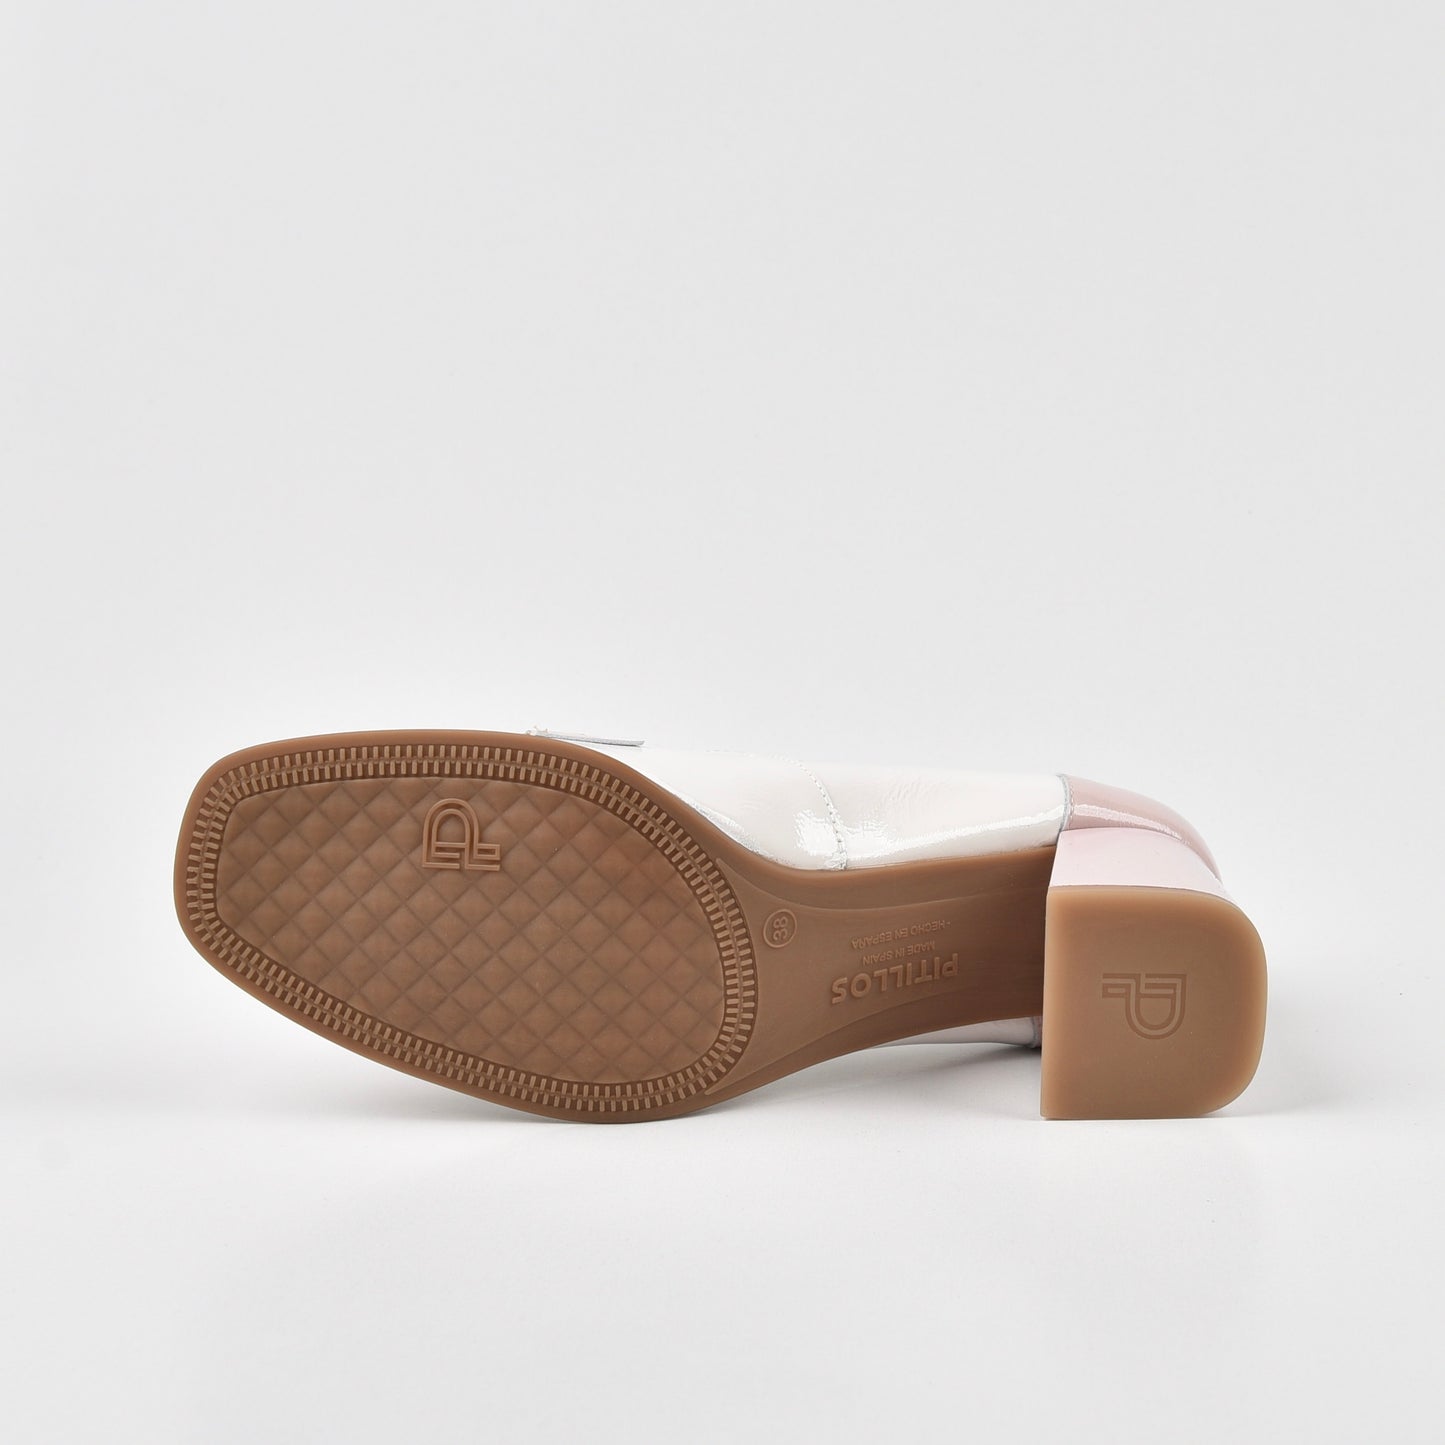 Pitillos Spanish High-heel Shoe for Women in Pink-Cream.